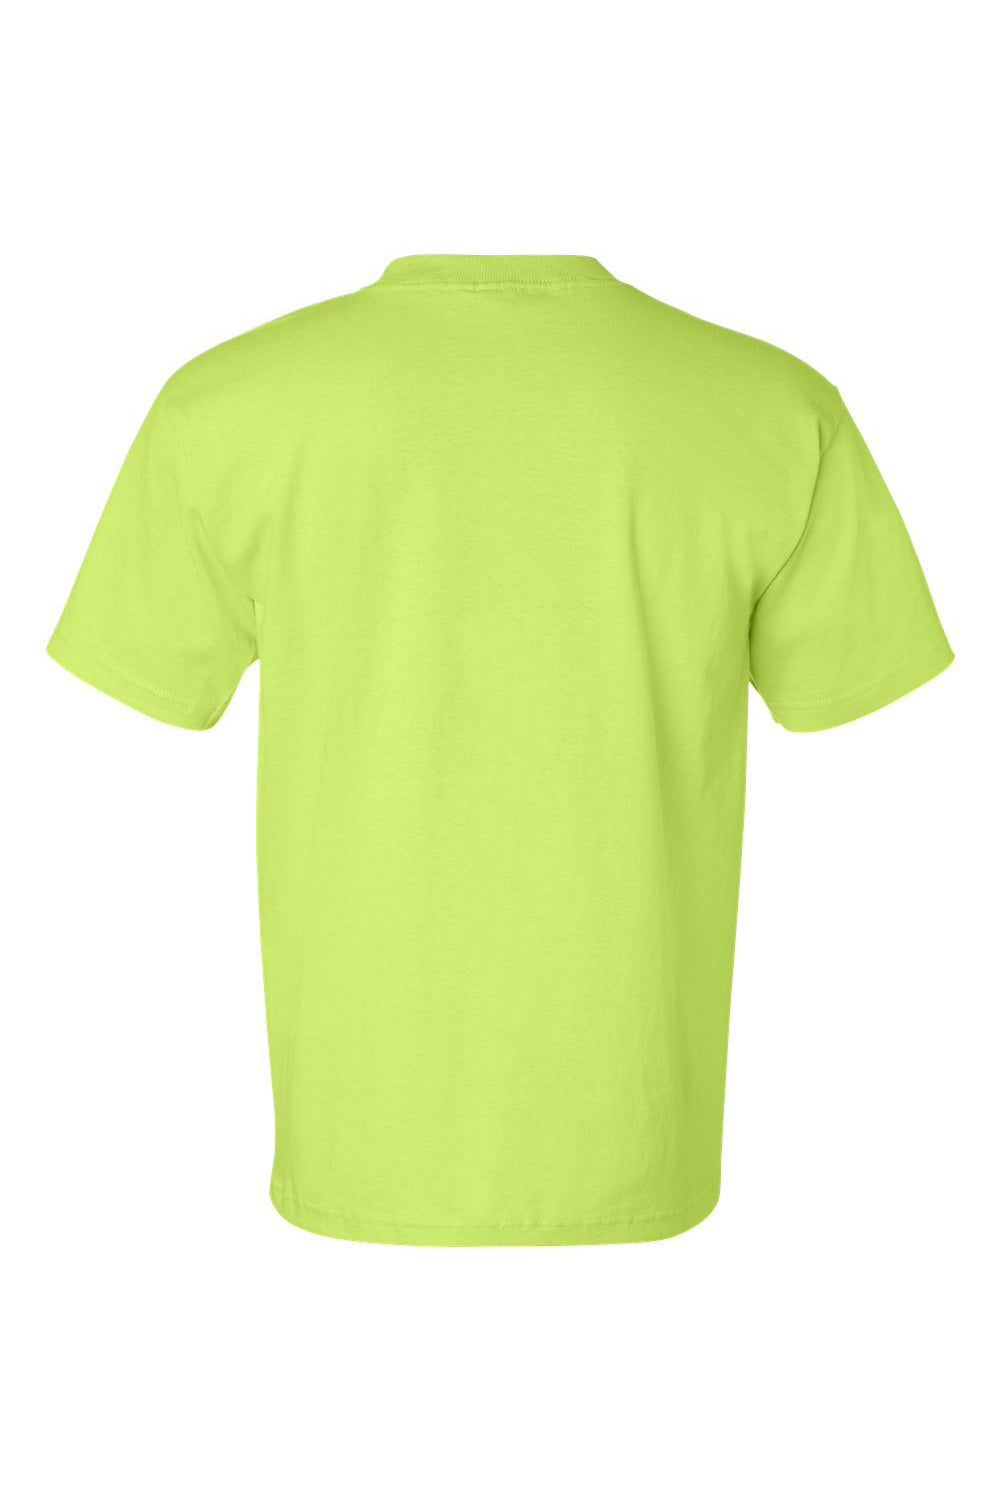 Bayside BA7100 Mens USA Made Short Sleeve Crewneck T-Shirt w/ Pocket Lime Green Flat Back